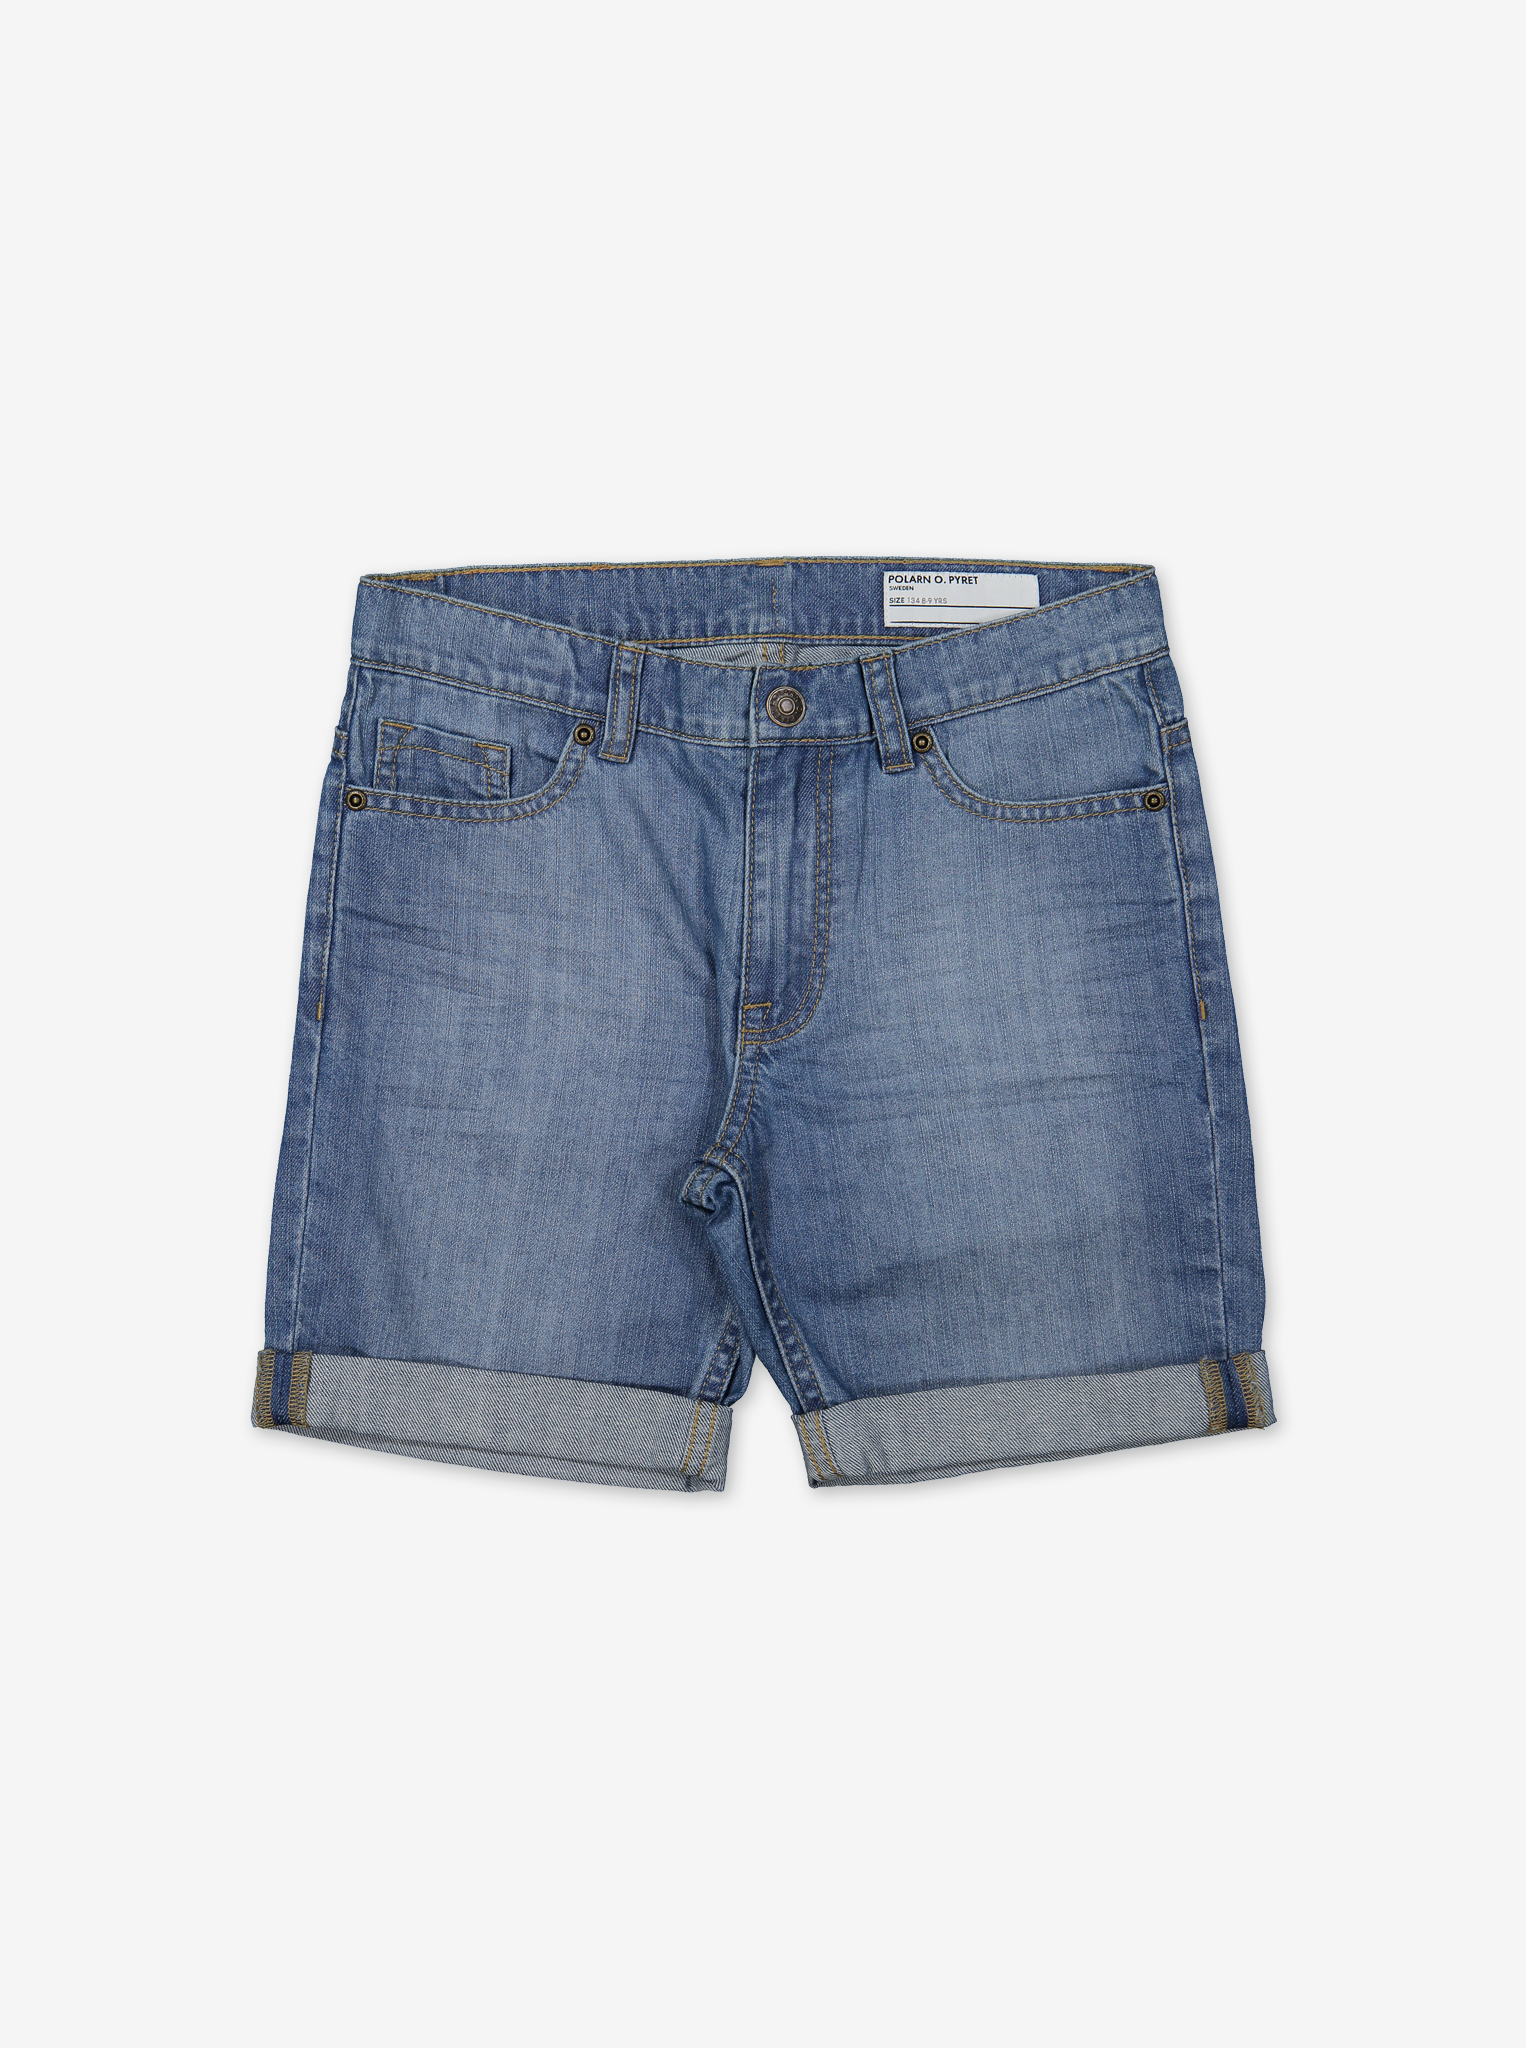 Denim Kids Shorts-Unisex-6-12y-Blue